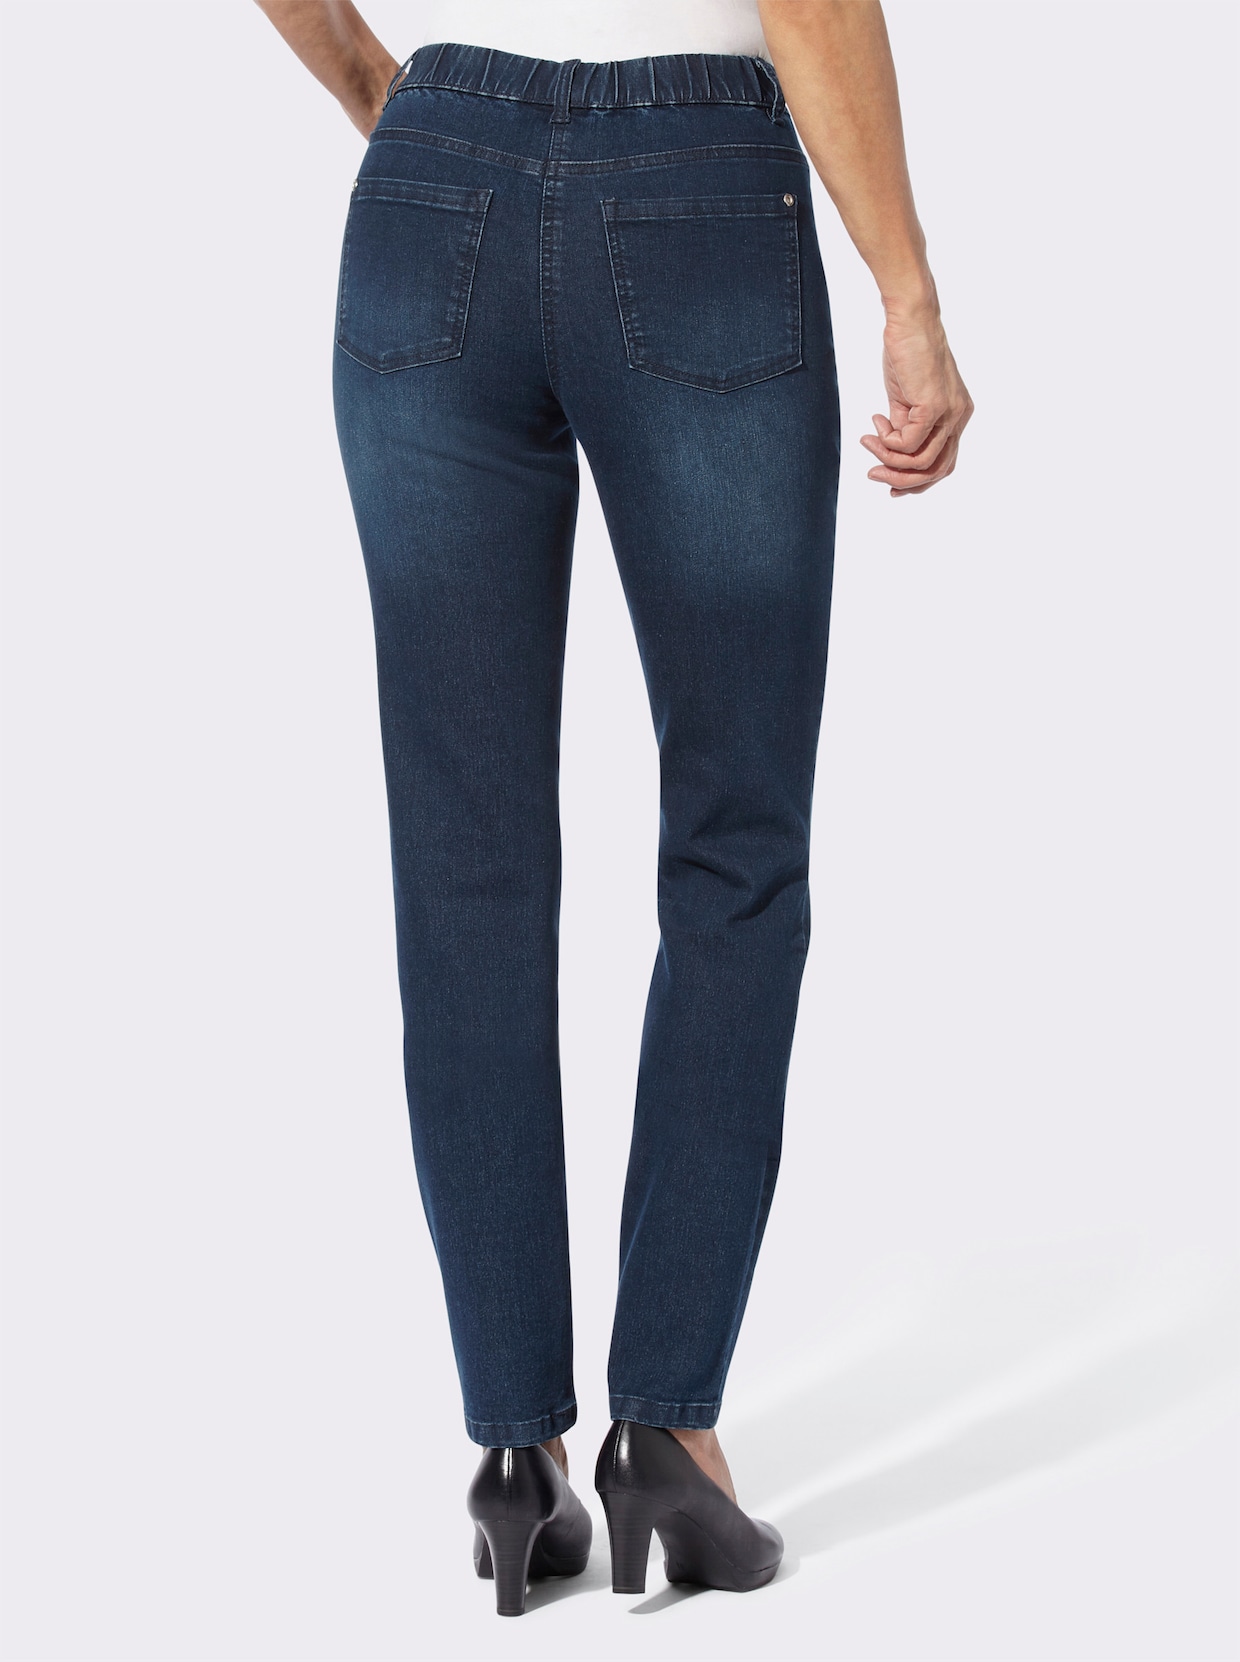 Jeans - dark blue used